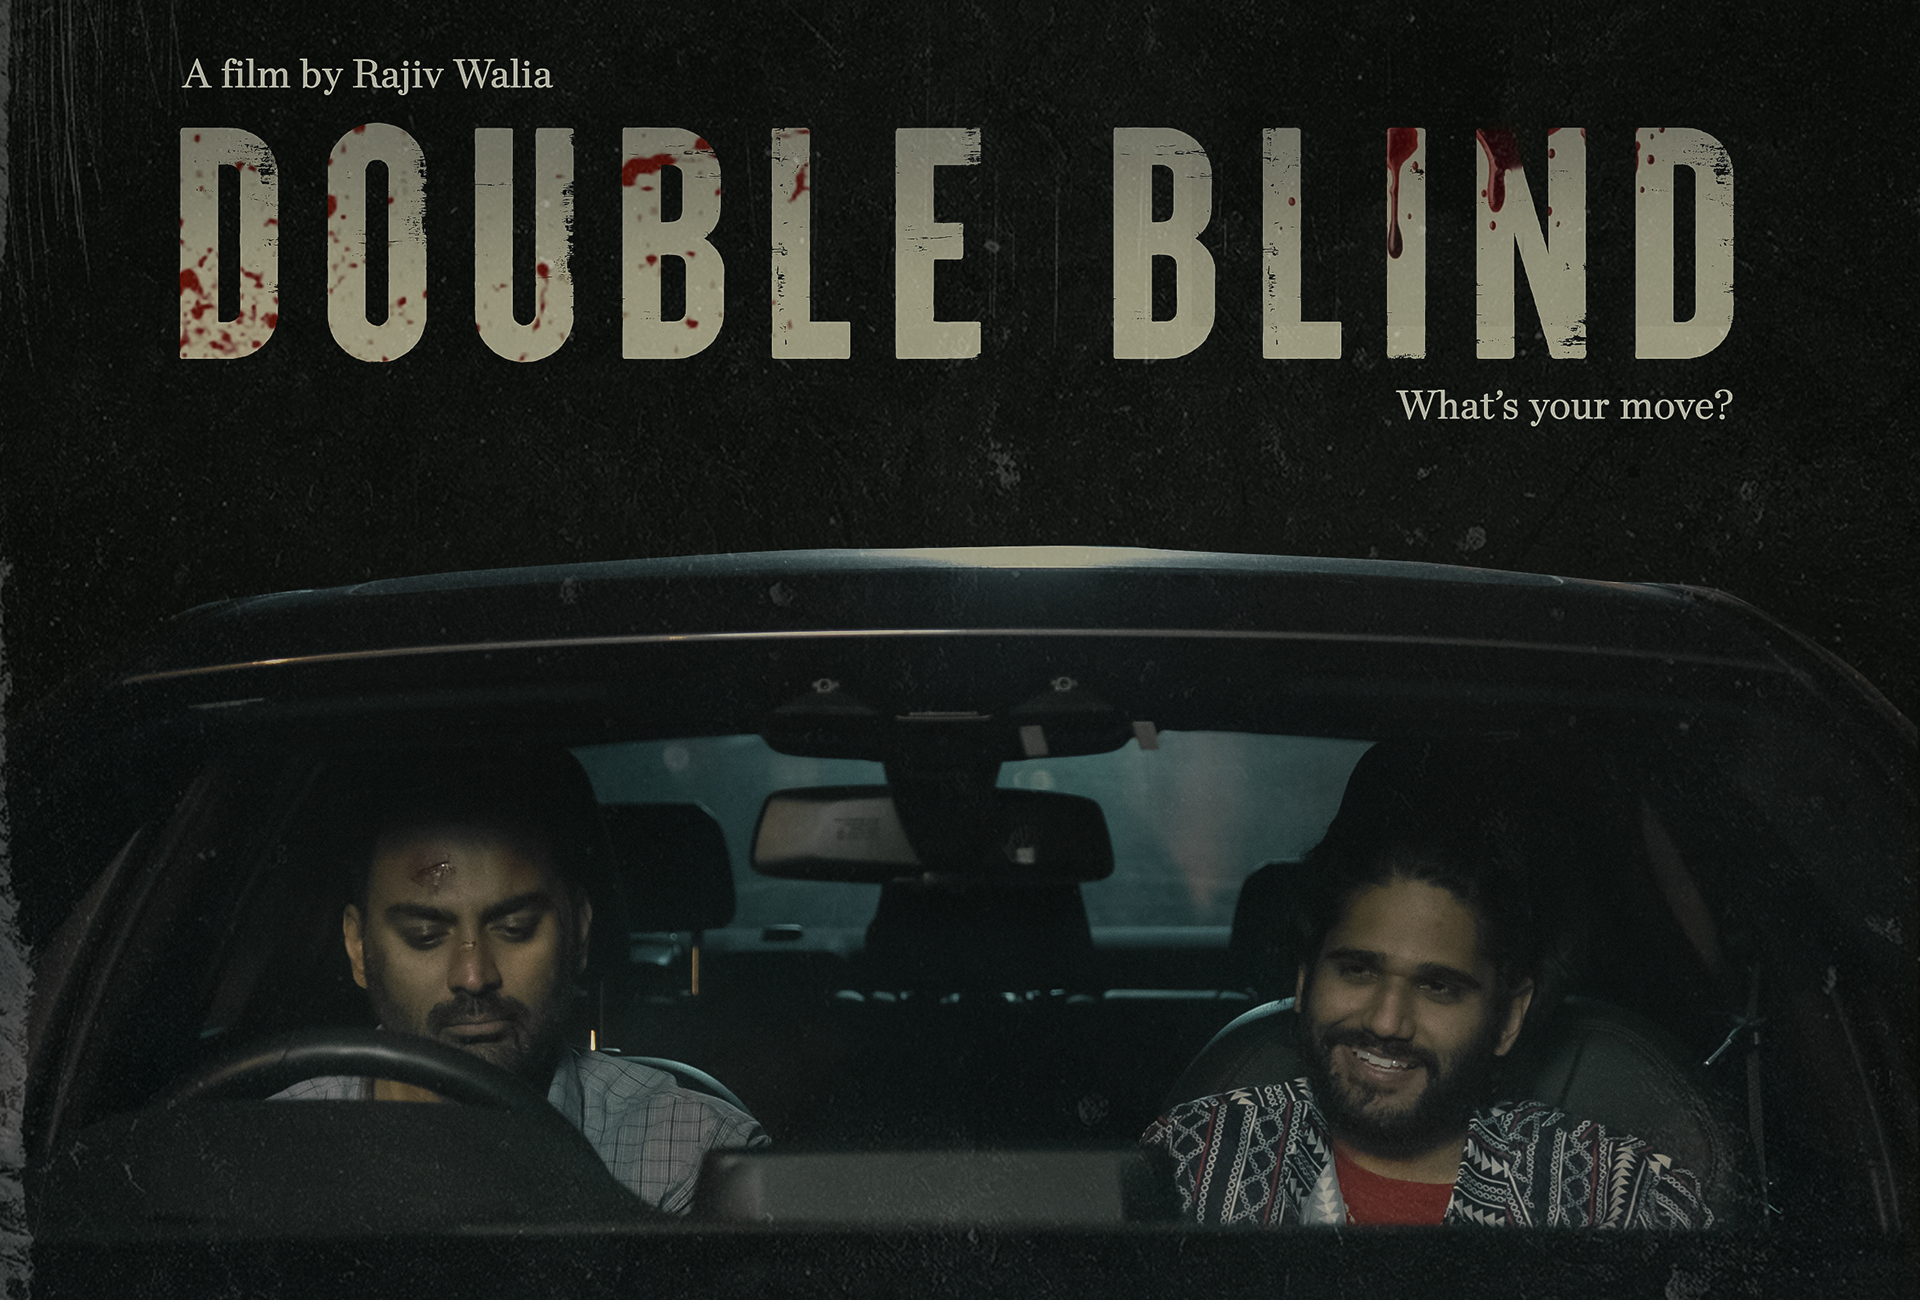 Actor Prepares alumnus, Deep Sheth stars in the short film 'Double Blind' by Pocket Film.